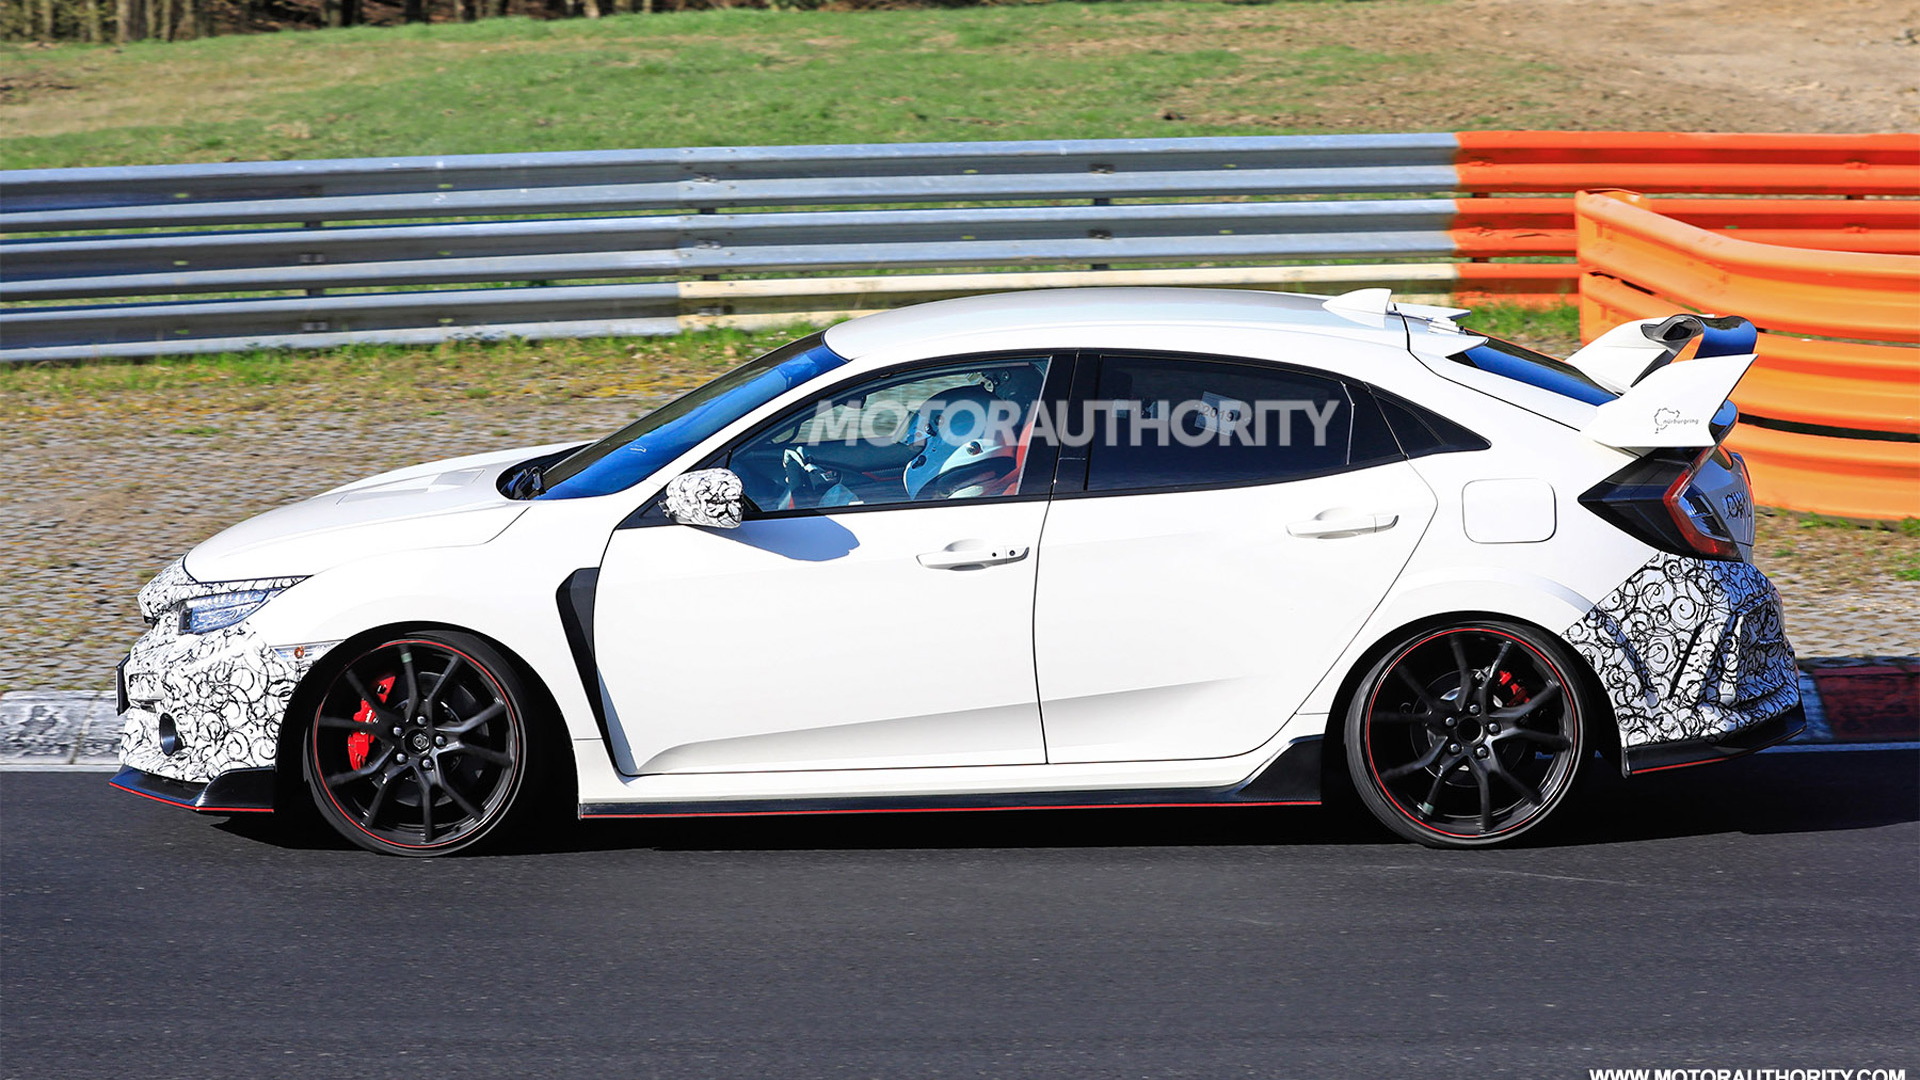 2020 Honda Civic Type R facelift spy shots - Image via S. Baldauf/SB-Medien